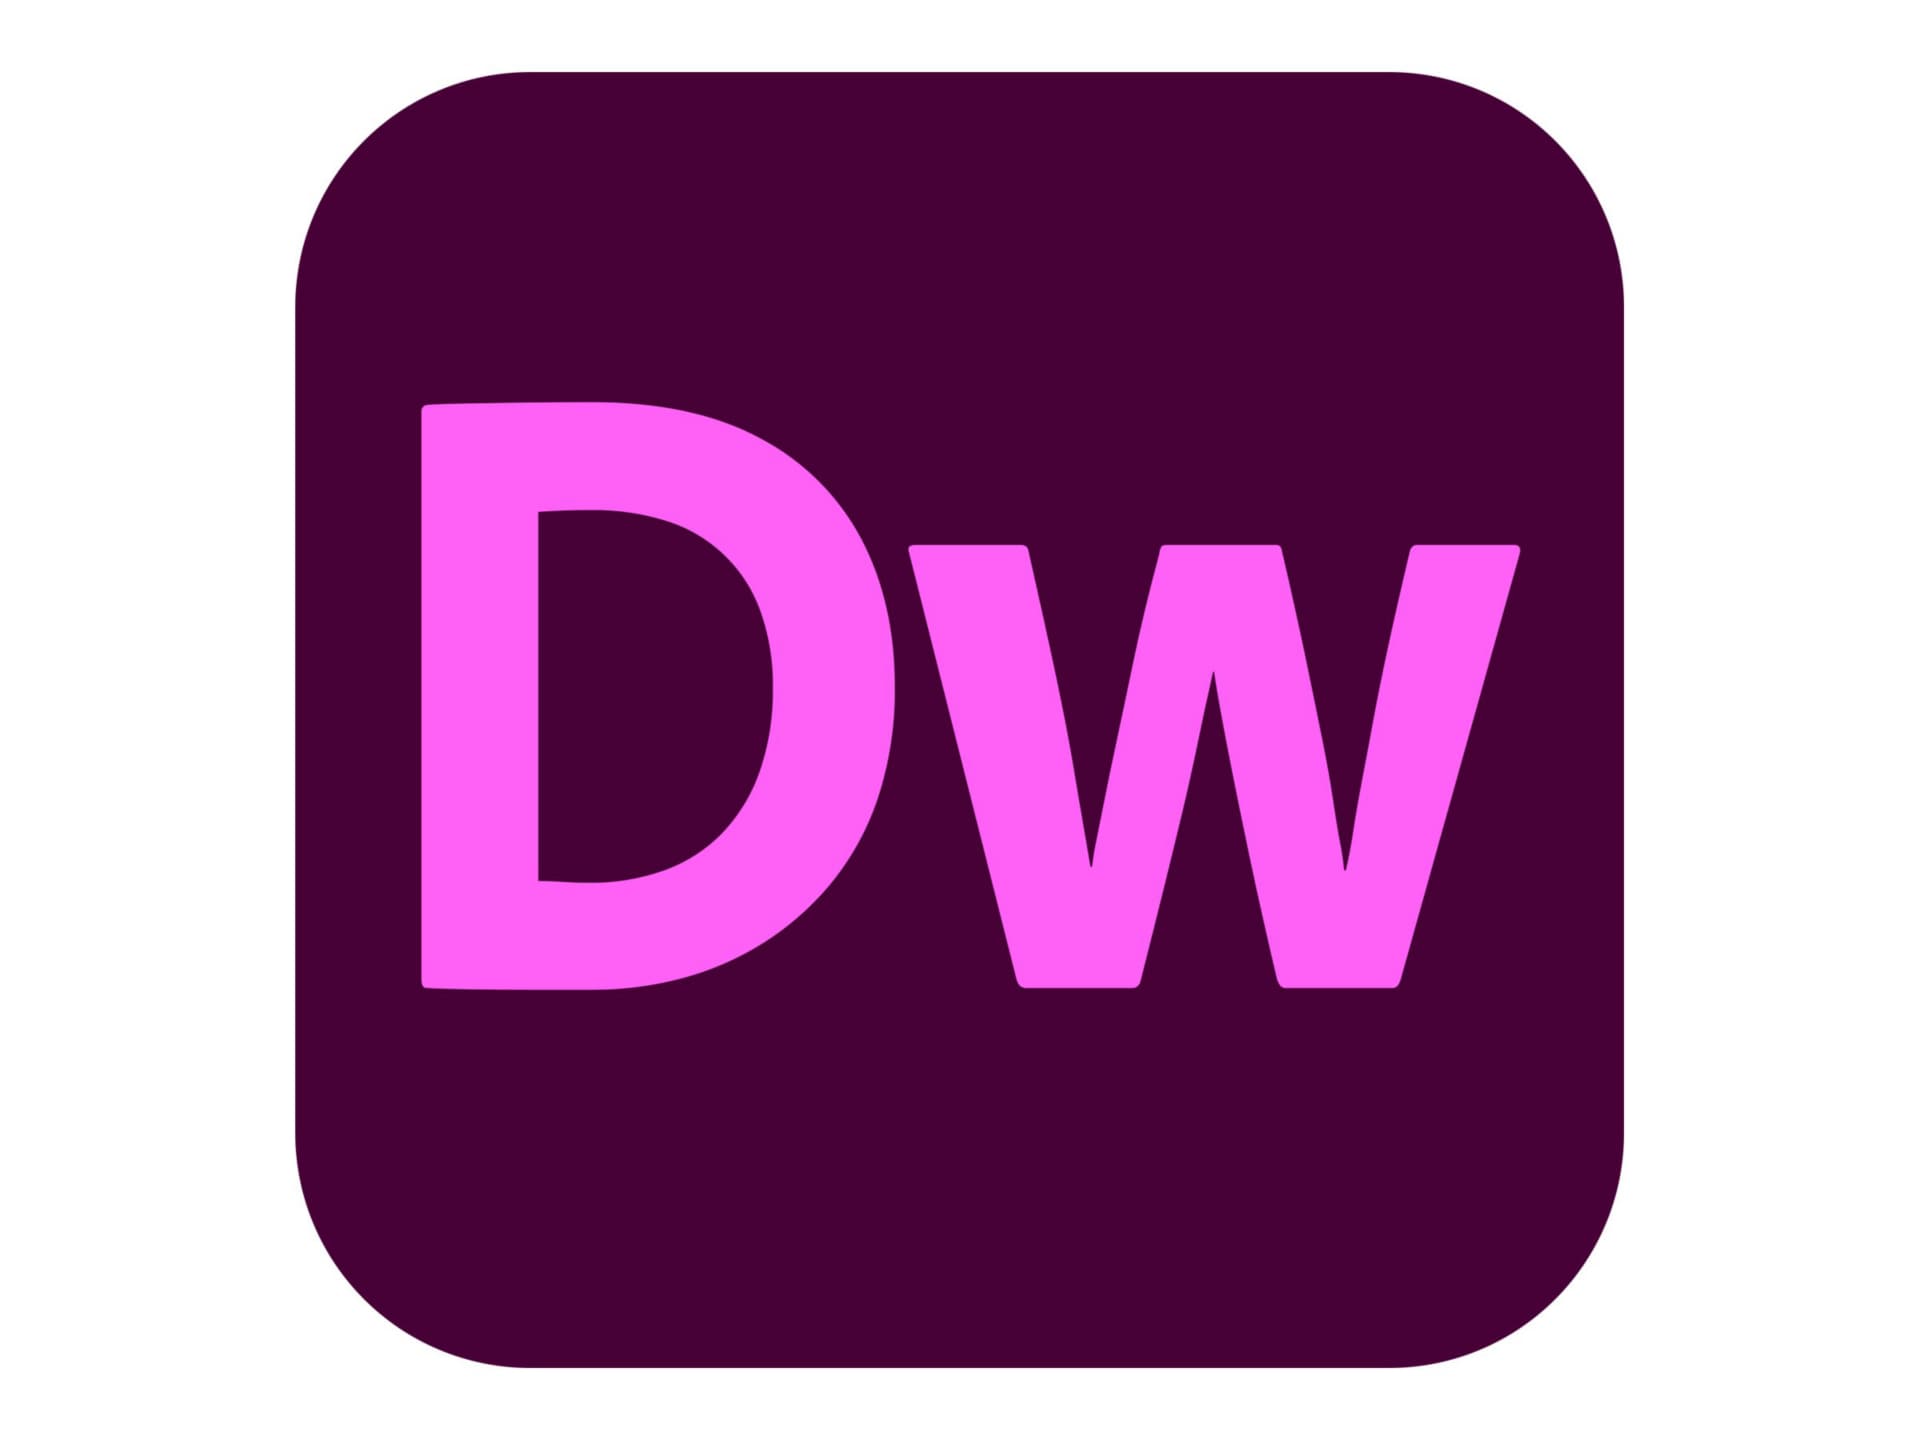 Adobe Dreamweaver CC for teams - Subscription Renewal - 1 user